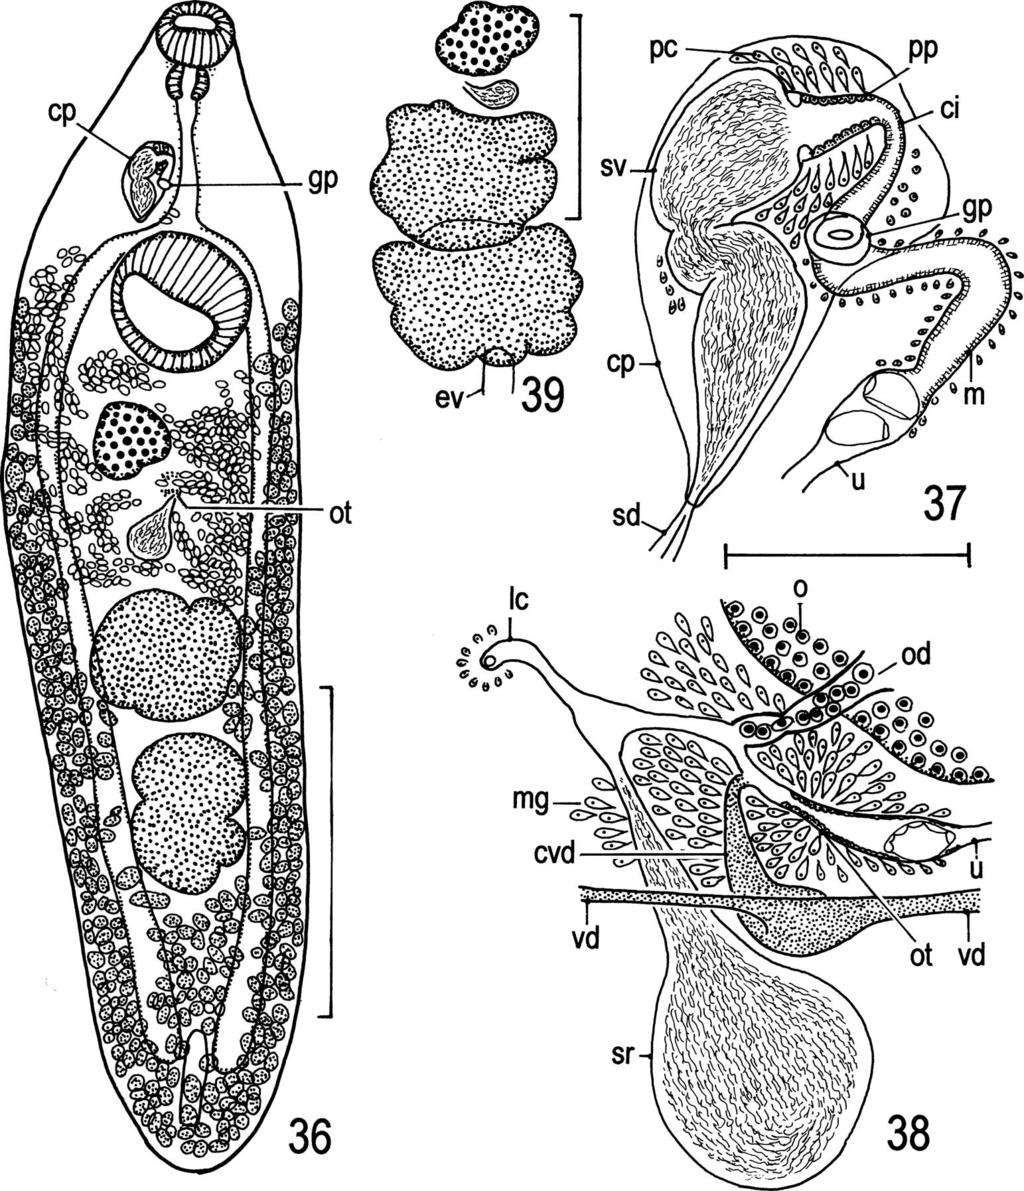 32 T. Shimazu et al. Figs. 36 39. Allocreadium hasu.